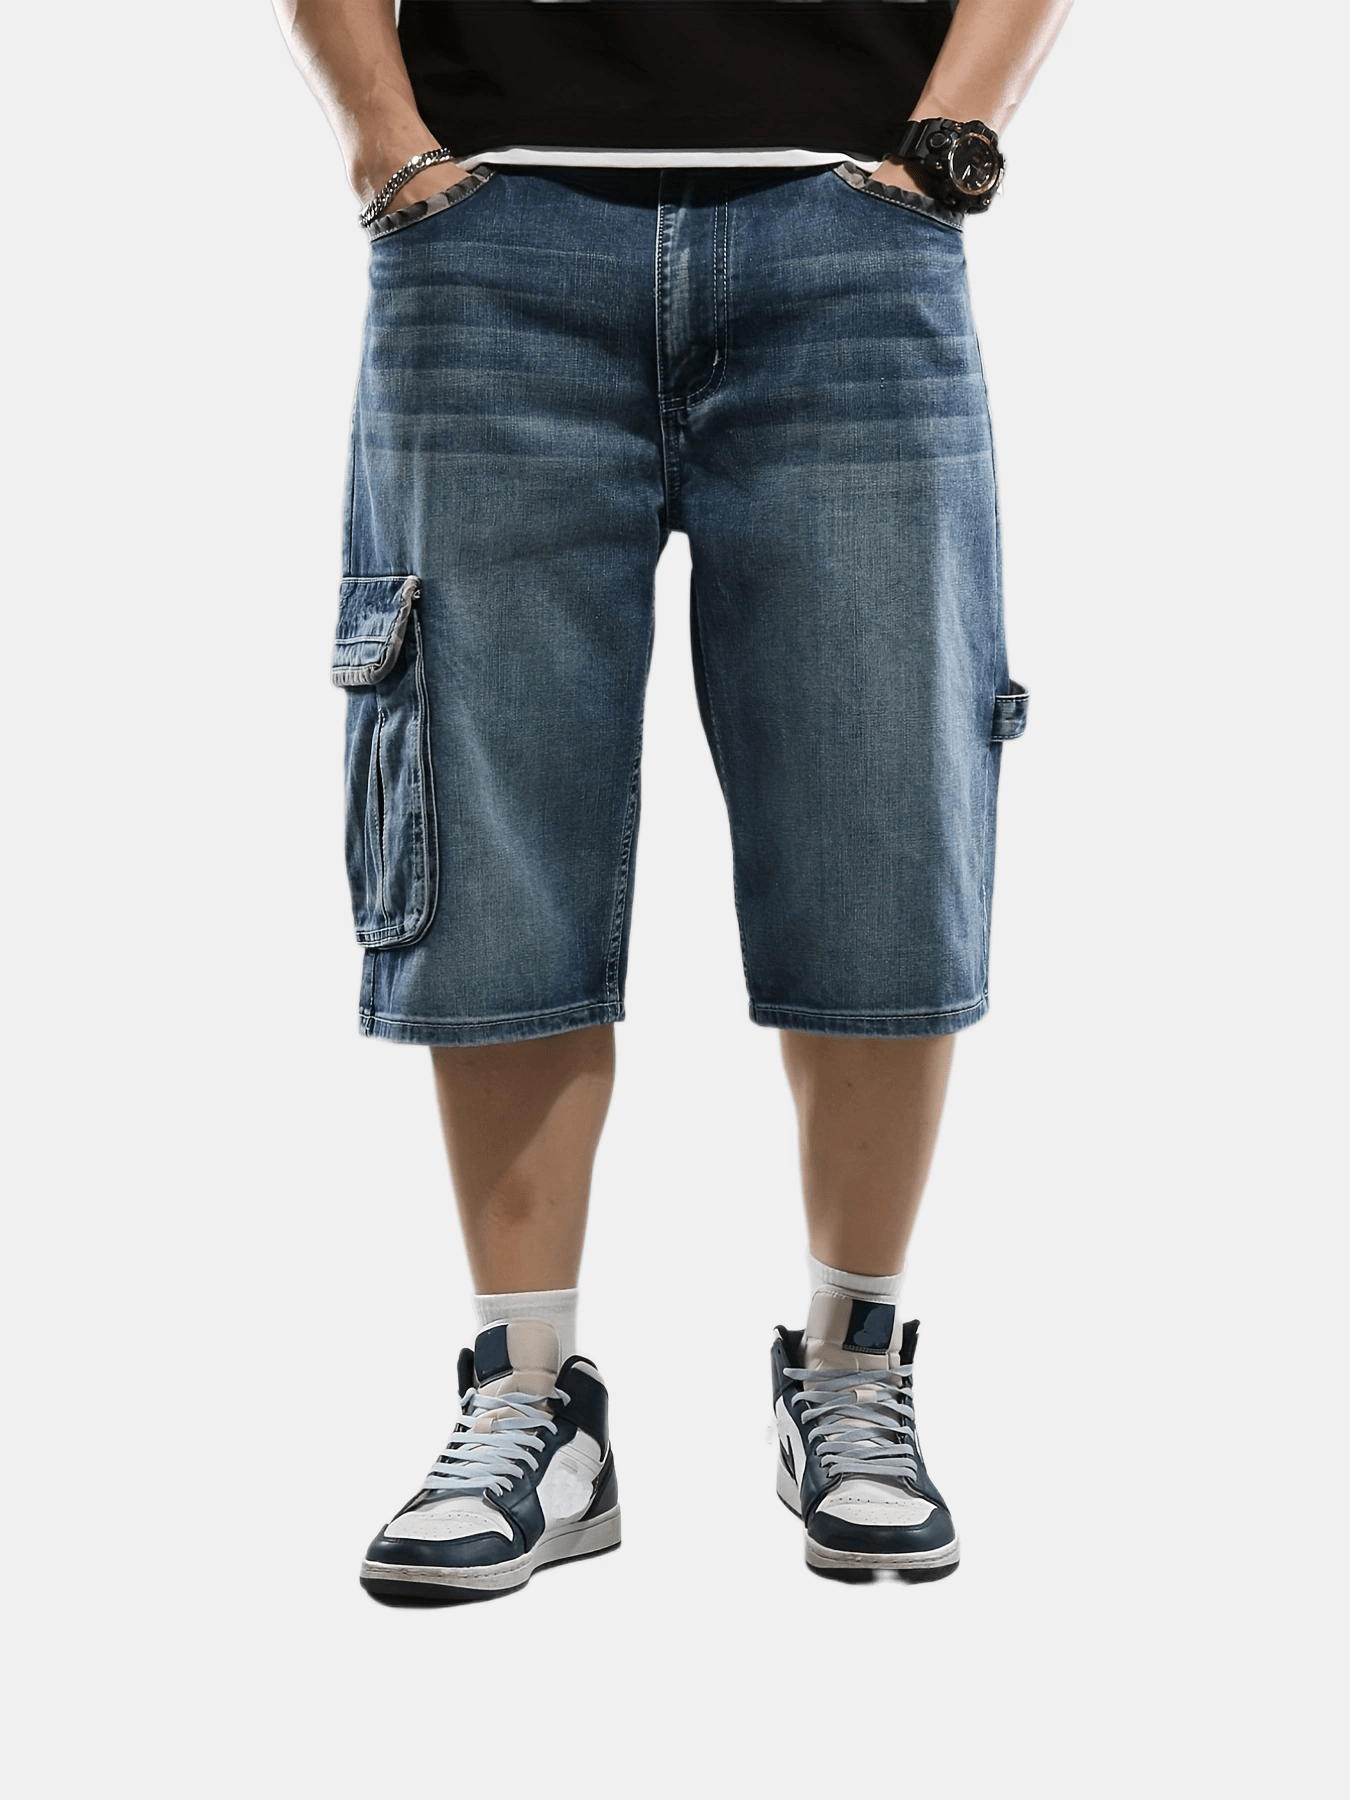 Summer Men Plaid Wide Leg Denim Shorts Casual Baggy Male Hip Hop